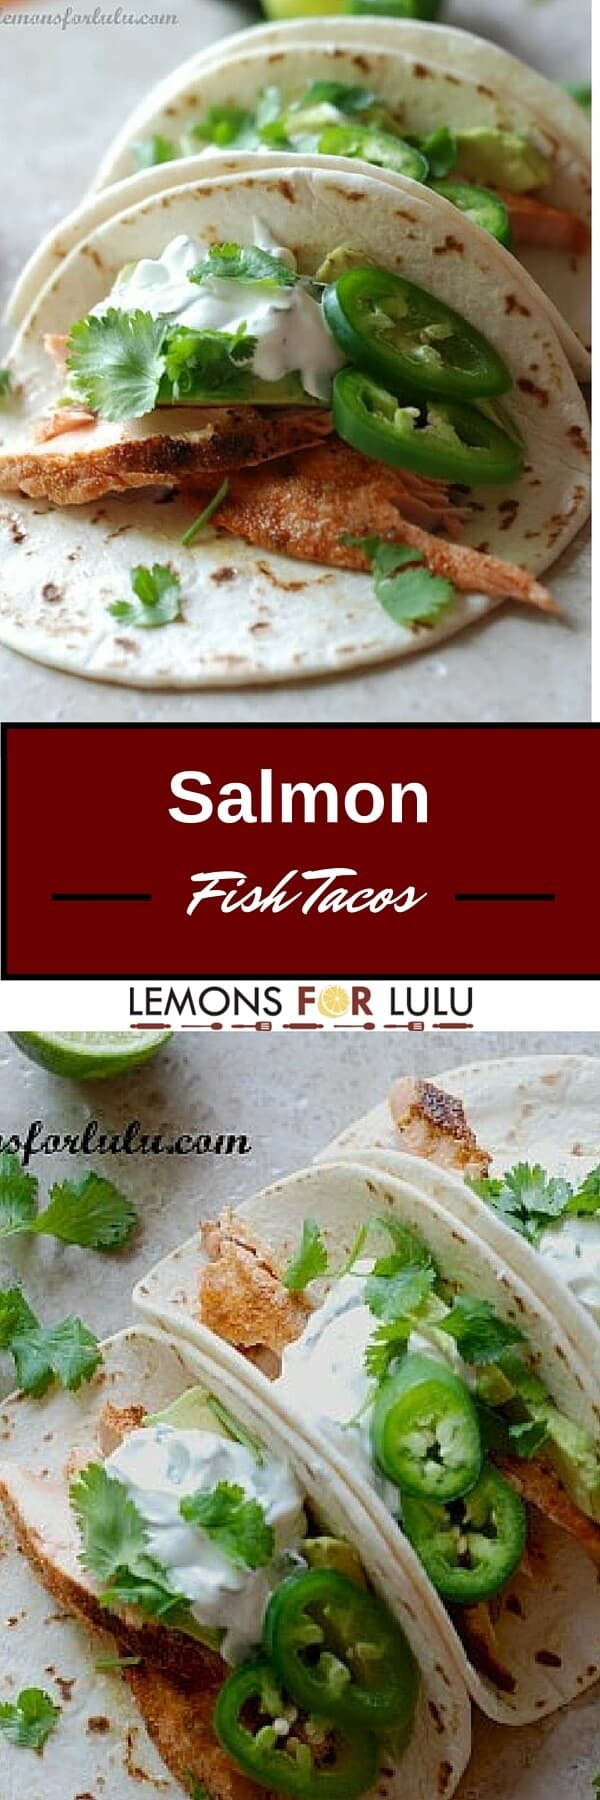 Salmon Fish Tacos Recipes
 Salmon Fish Tacos with Jalapeno Cream LemonsforLulu